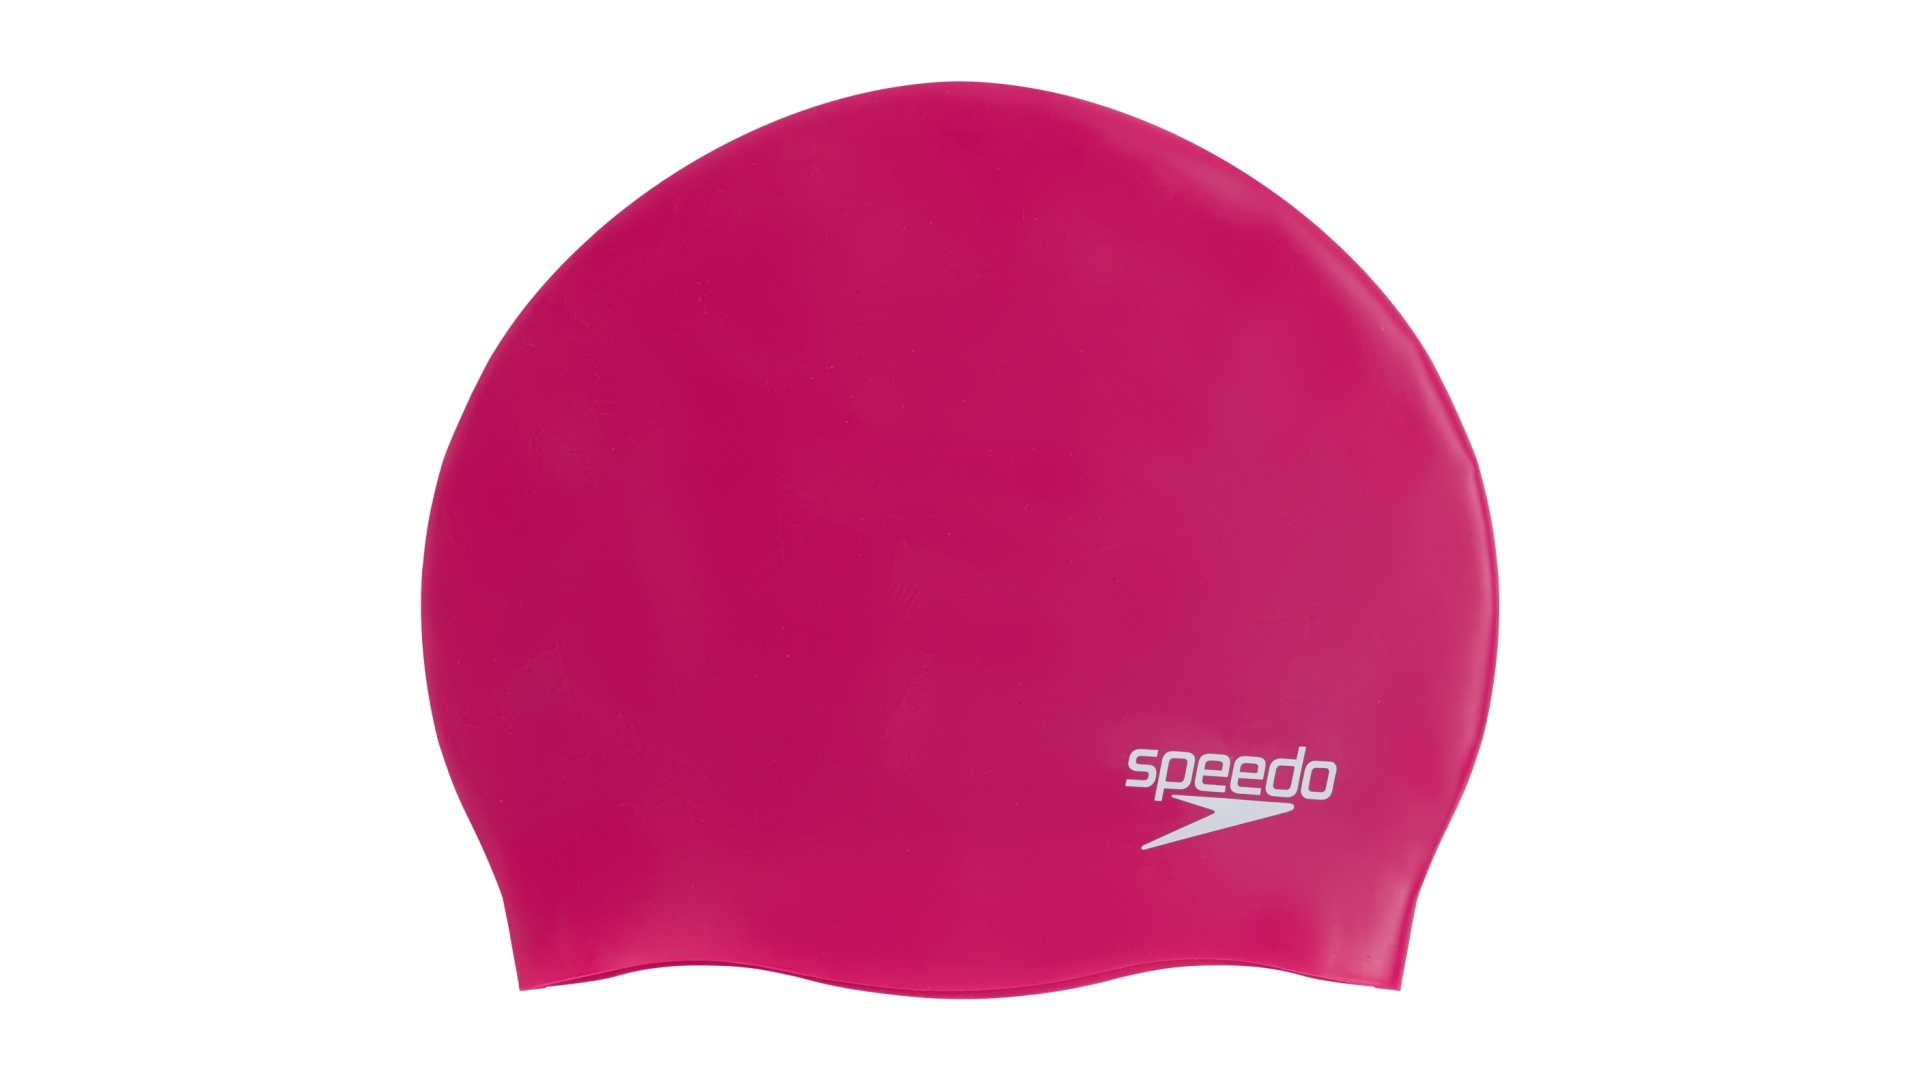 Speedo Plain moulded silicone cap